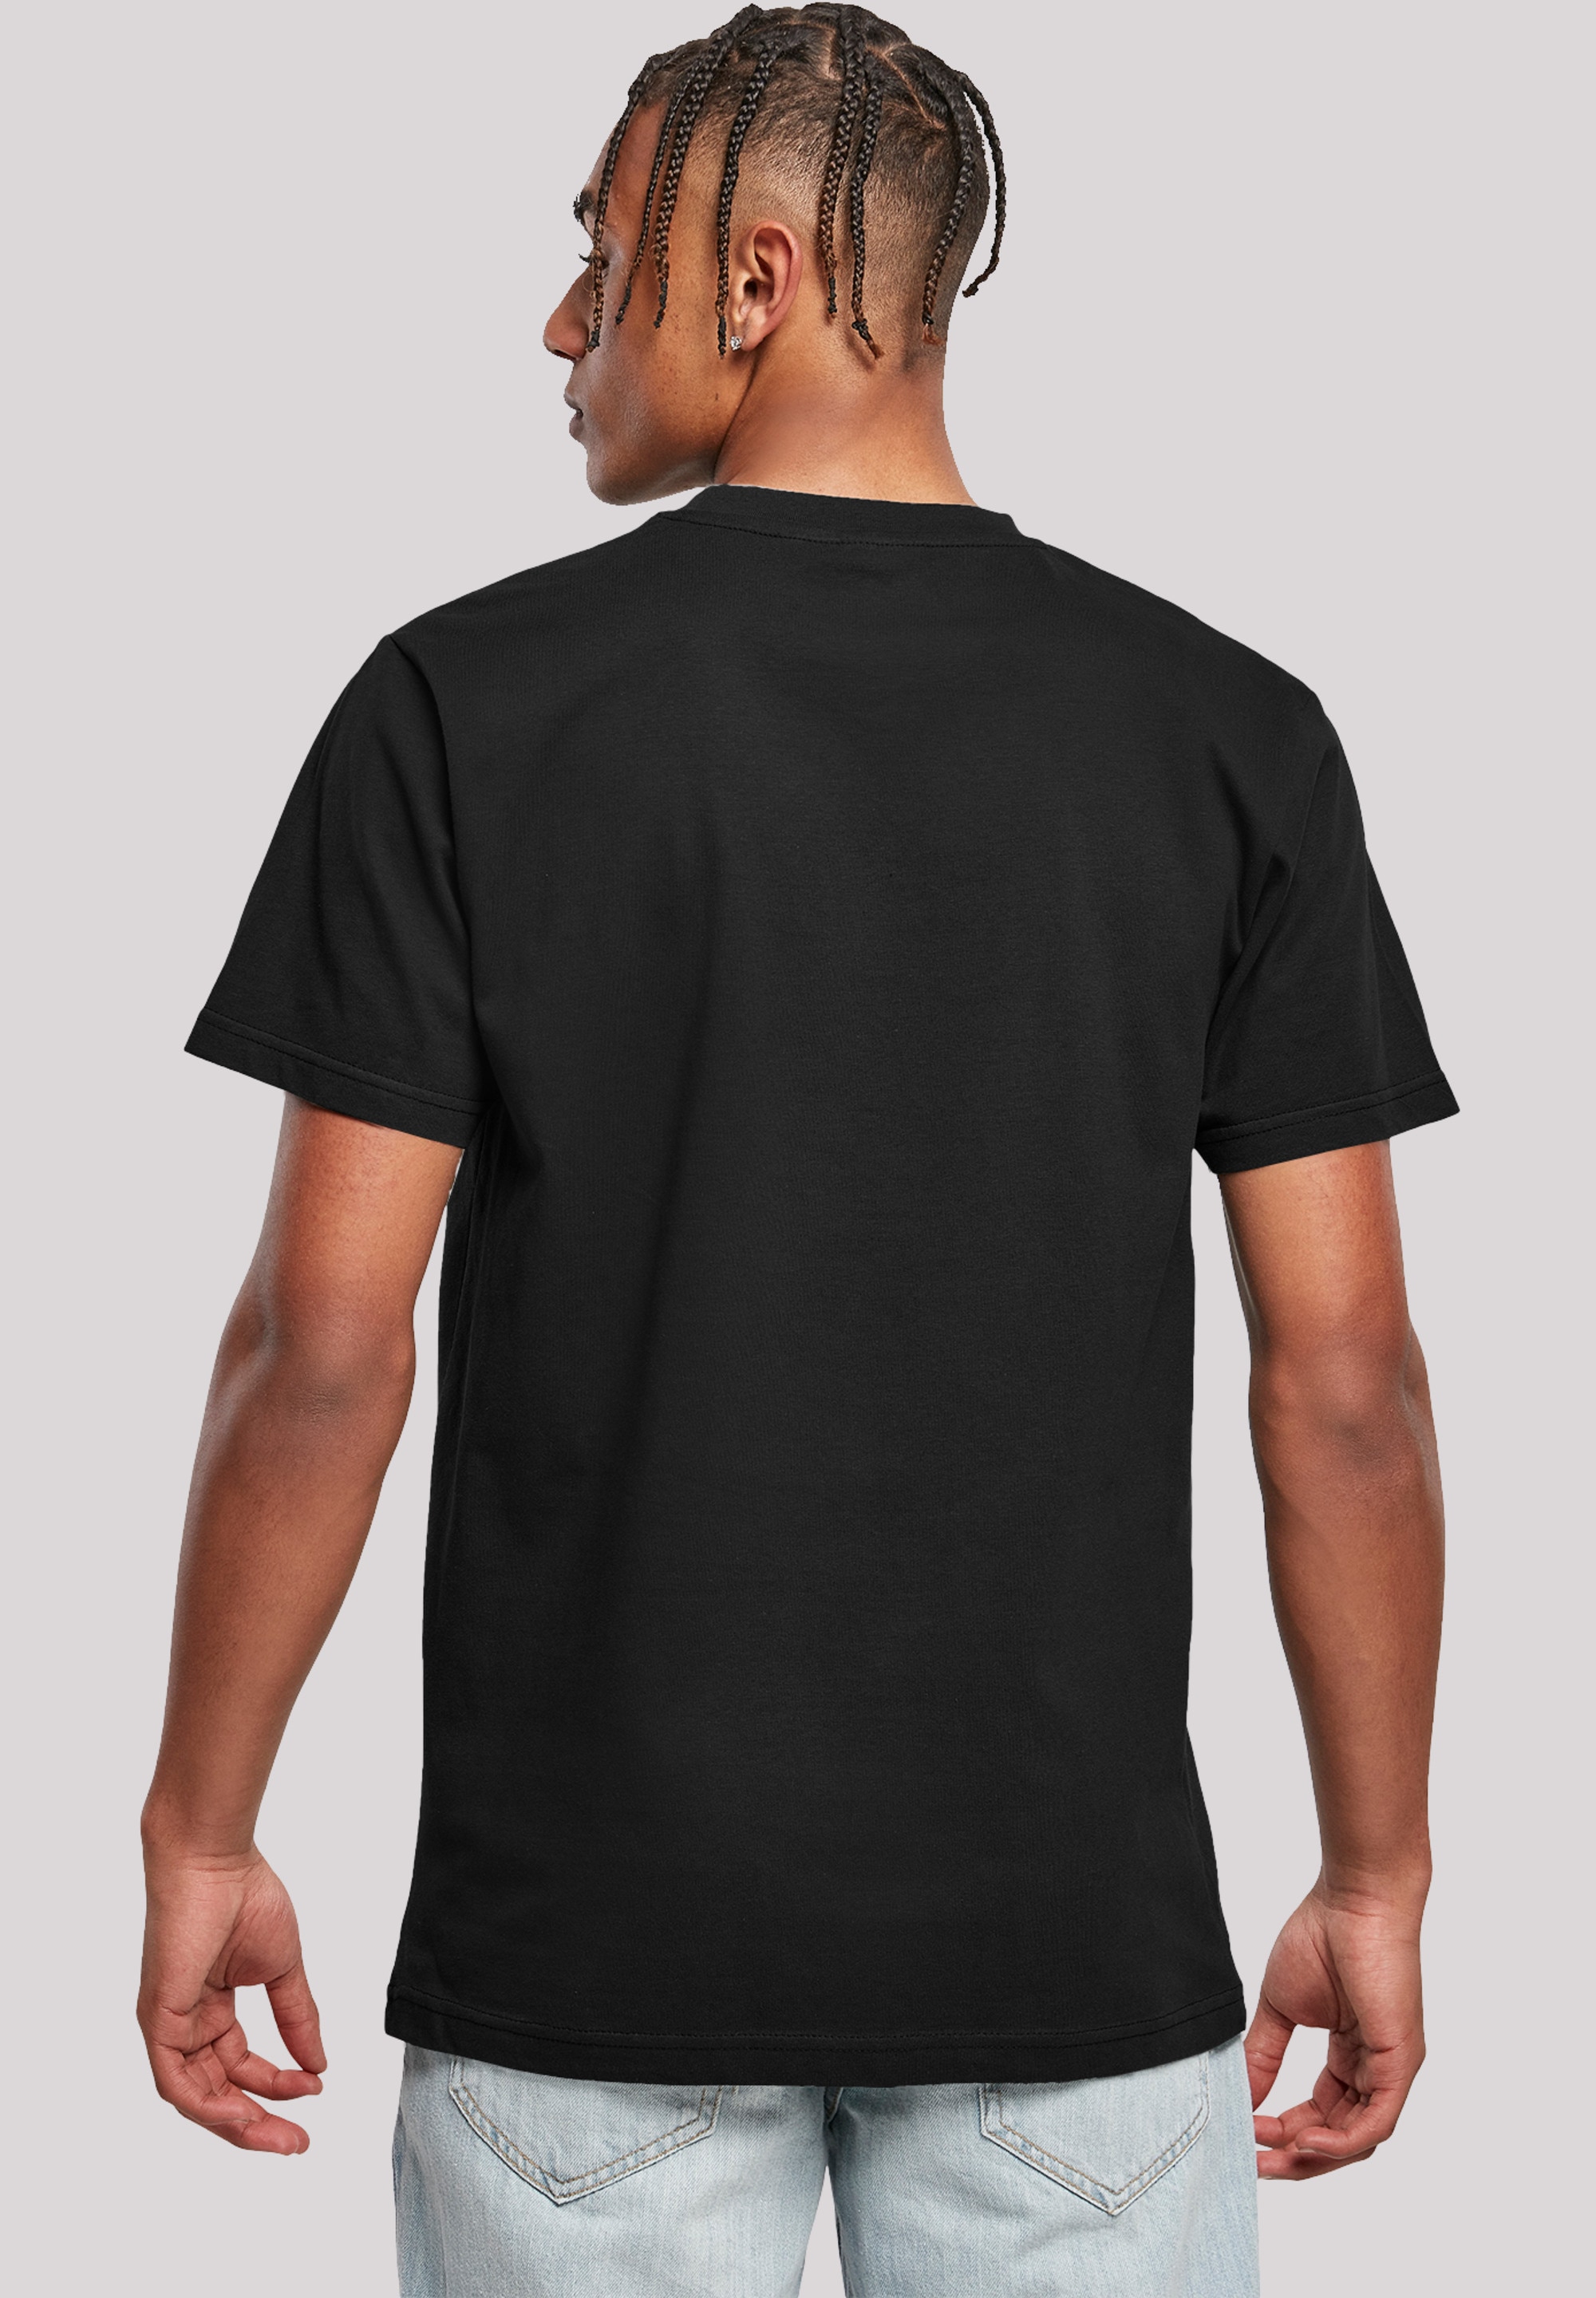 F4NT4STIC T-Shirt »Star Wars Collector's Edition«, Herren,Premium Merch,Regular-Fit,Basic,Bedruckt